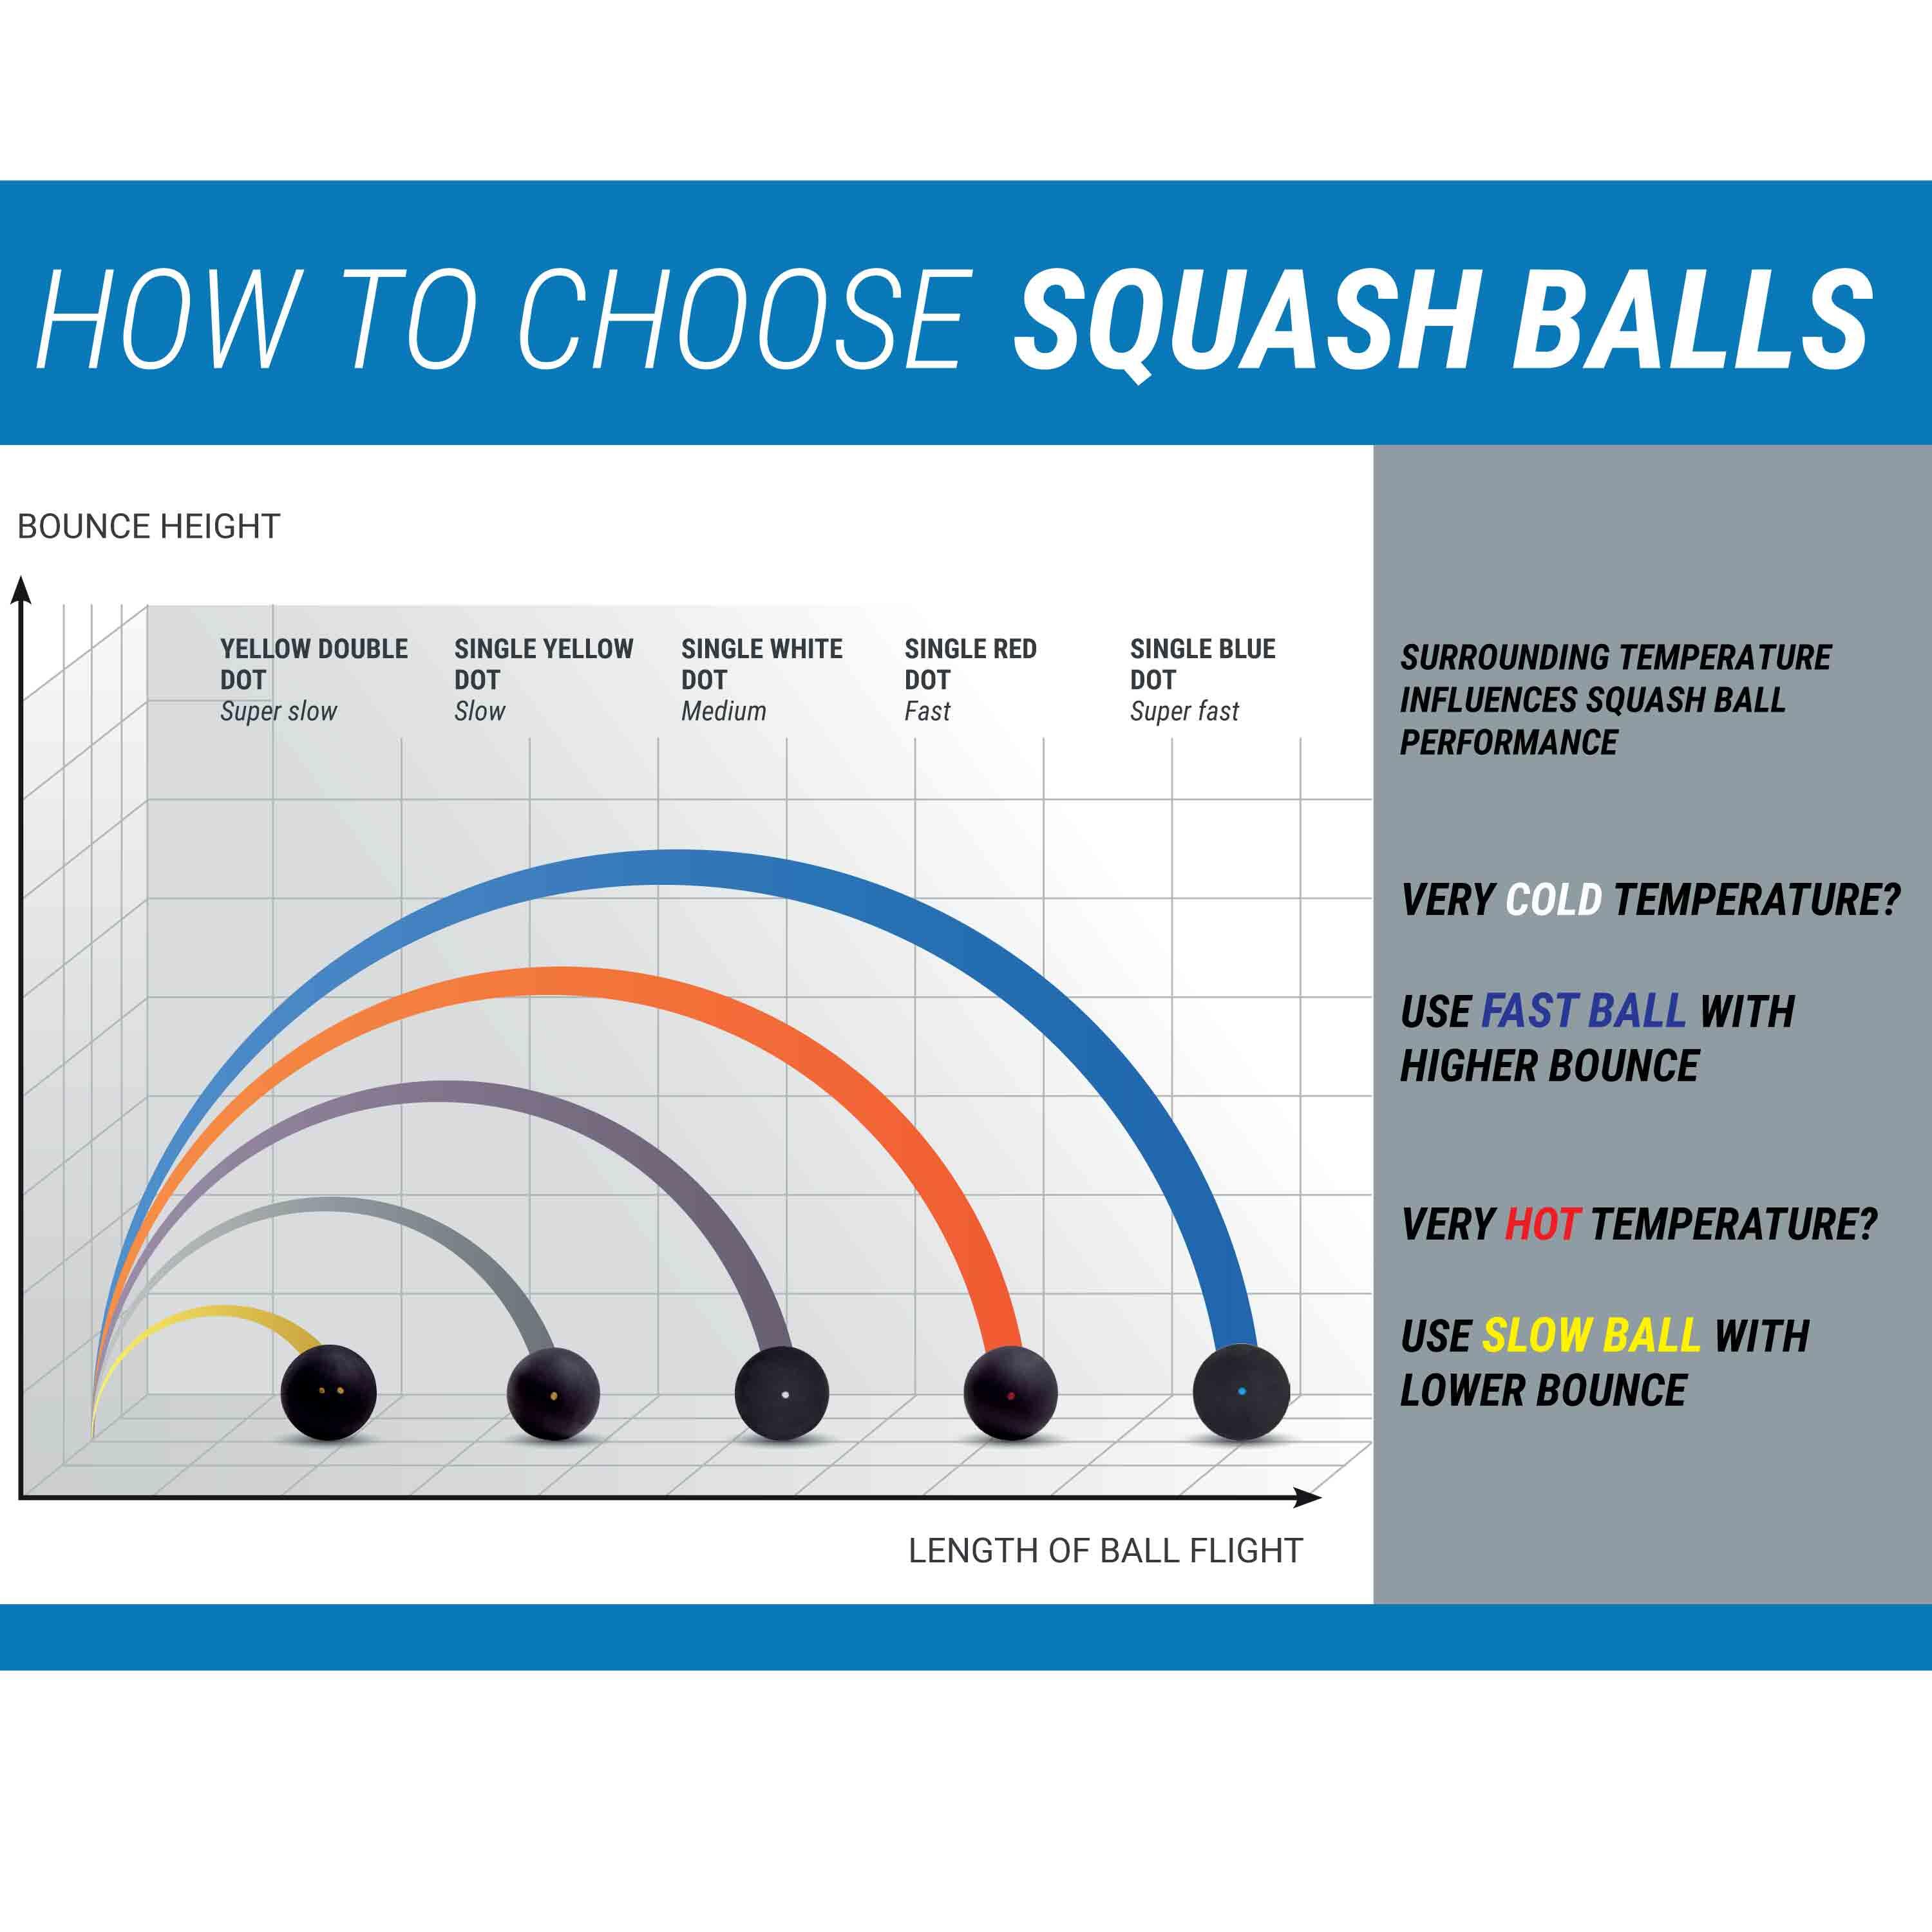 Double Yellow Dot Squash Balls SB 990 Twin-Pack 4/4